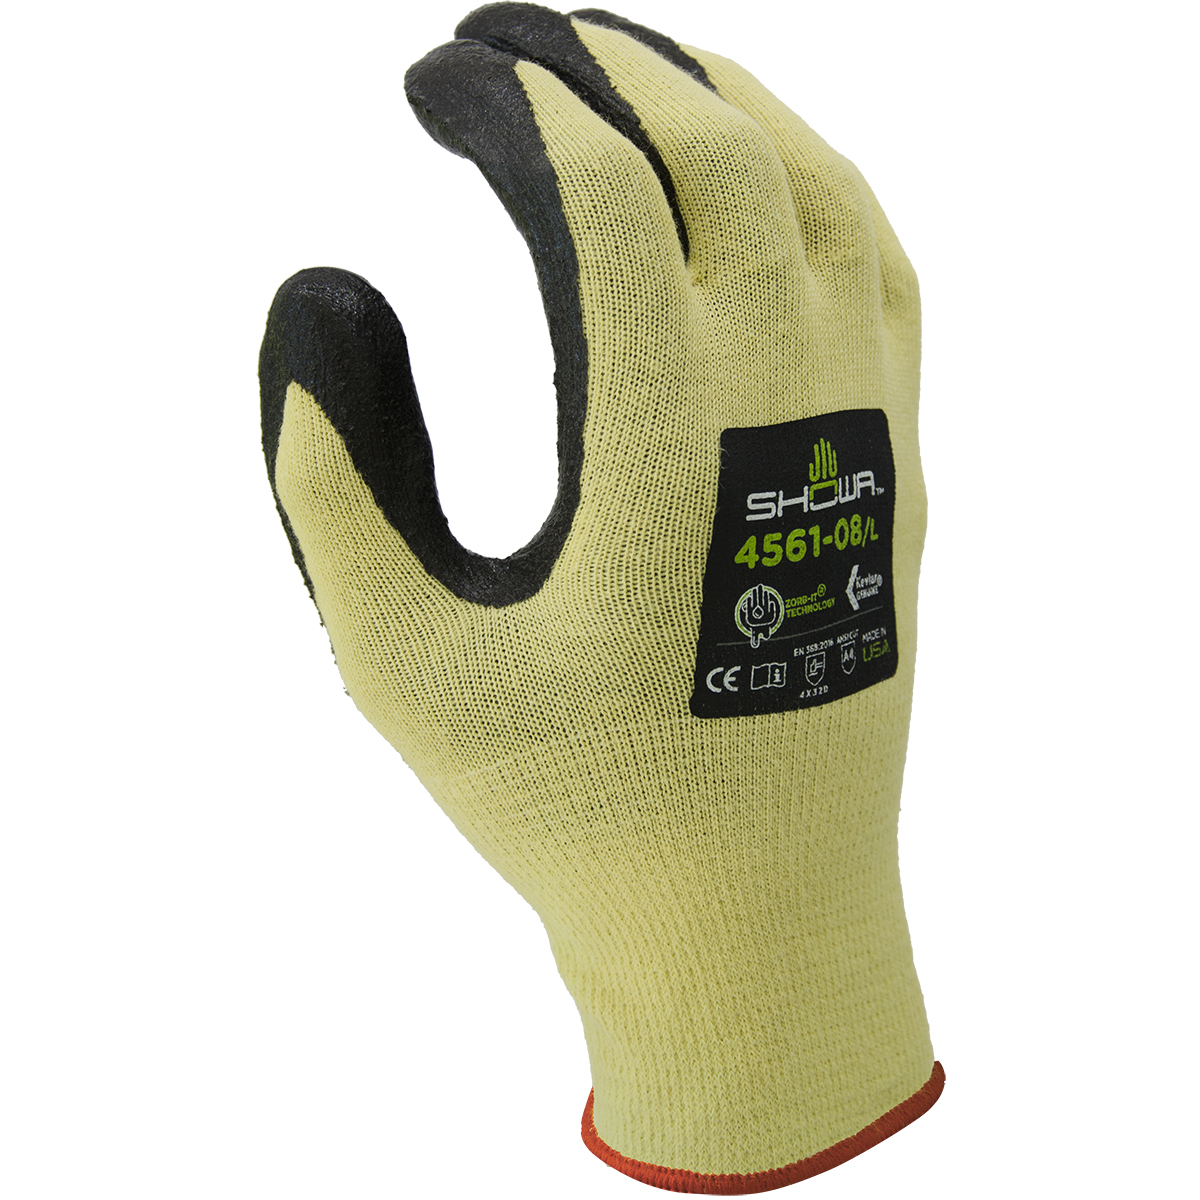 Cut resistant, sponge nitrile palm w/Zorb-IT technology, 15 gauge seamless knit made Kevlar®, yellow w/black dip,  ANSI CUT LEVEL A4/large